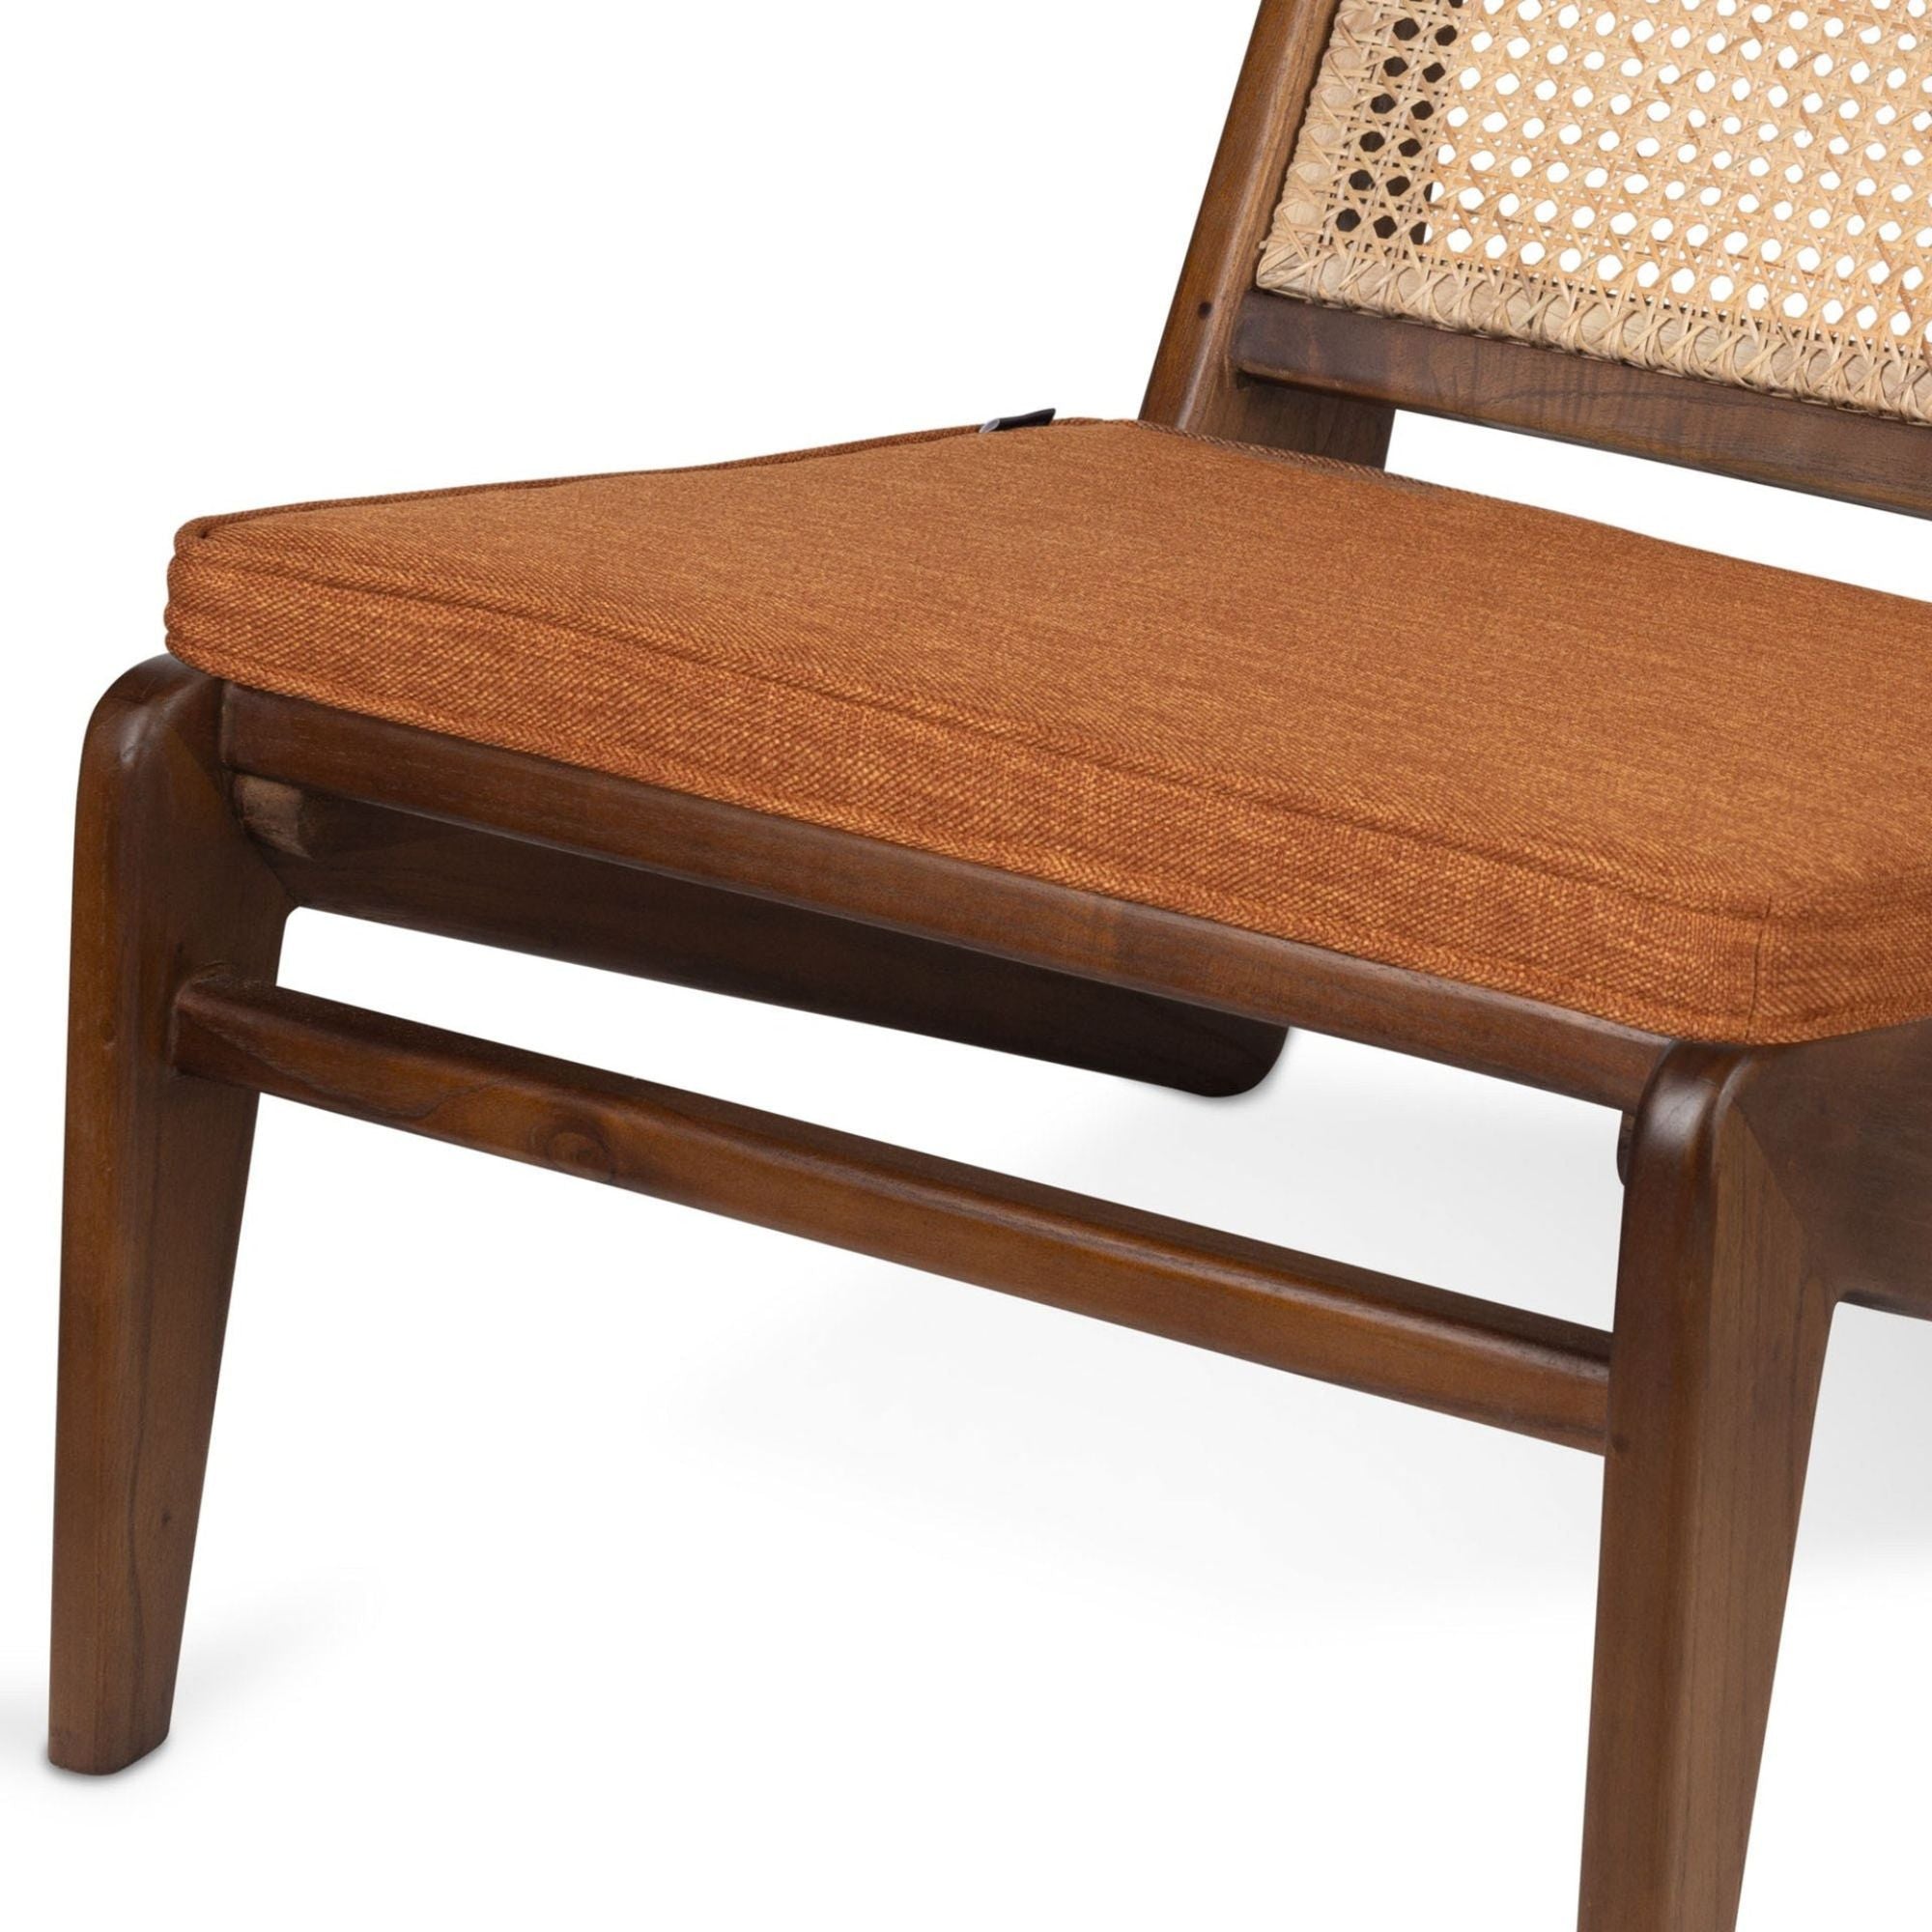 Cushion for Kangaroo Chair - THAT COOL LIVING